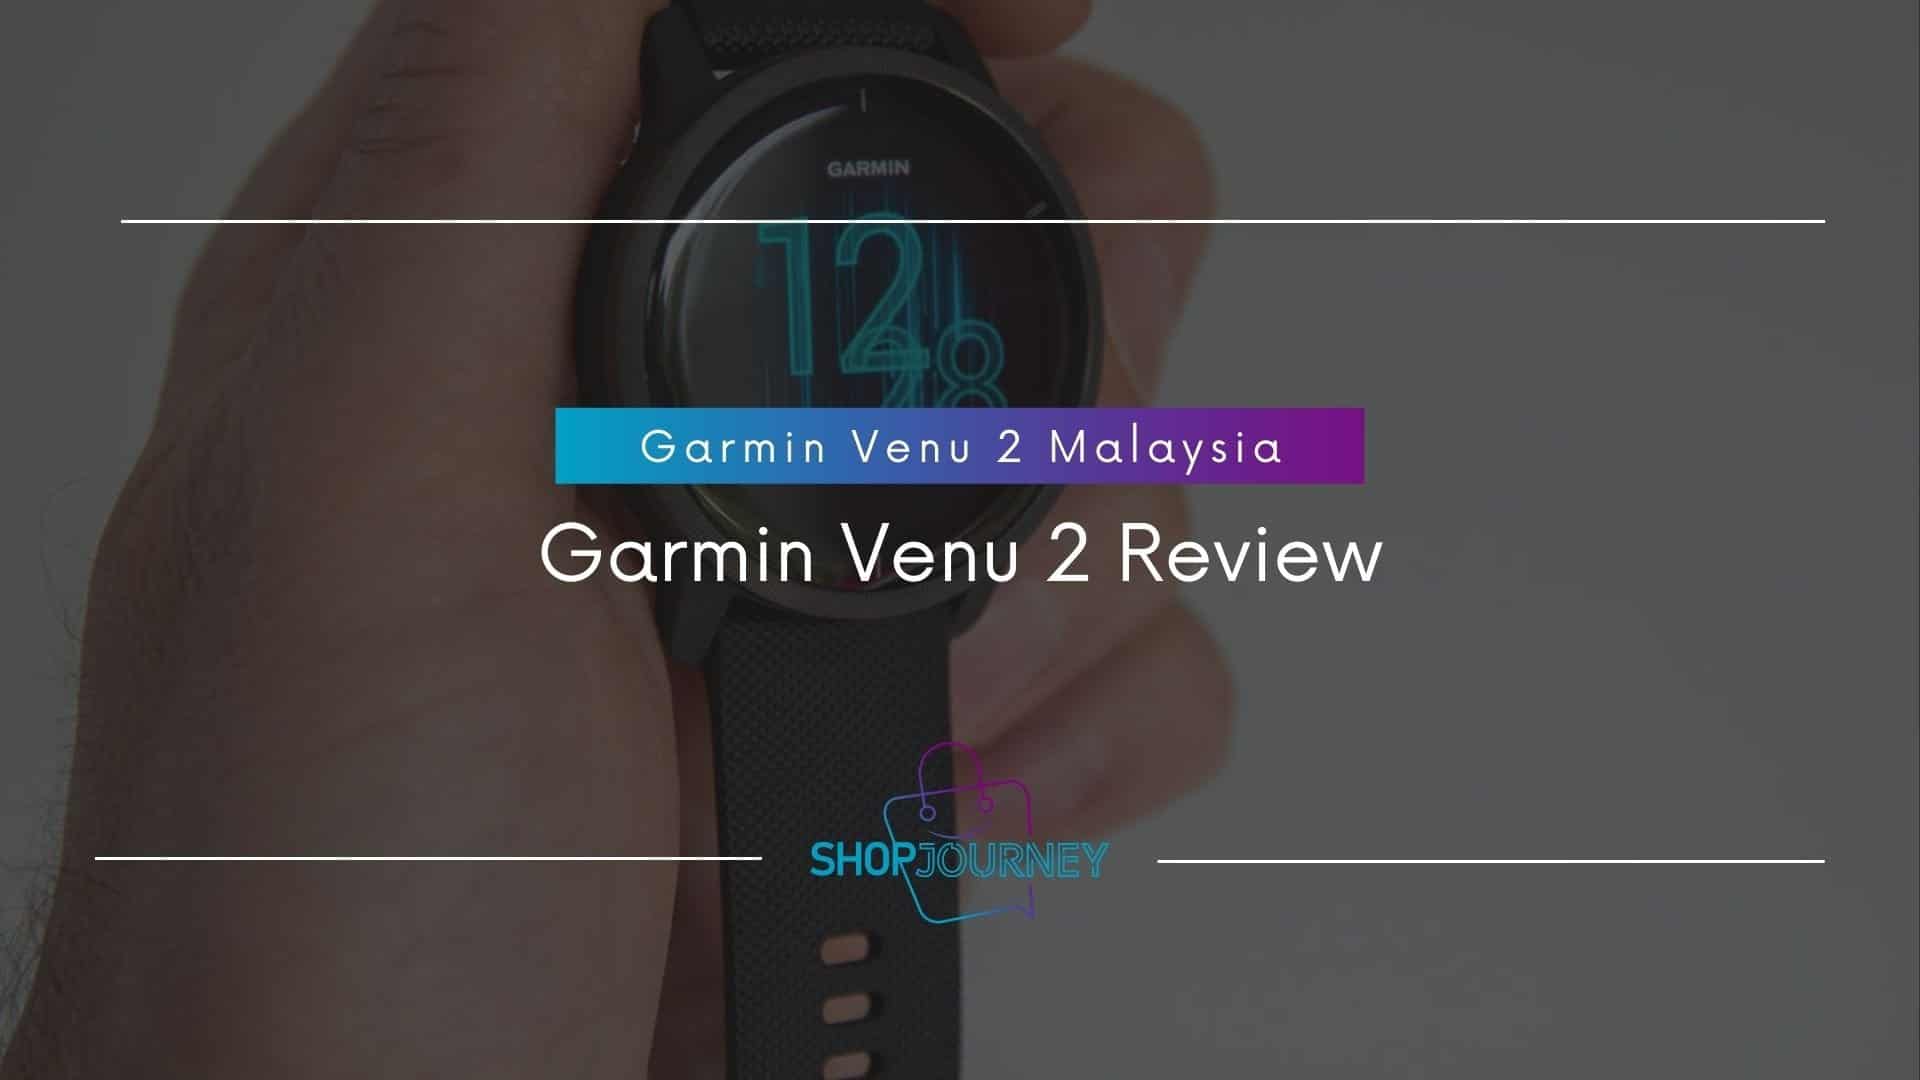 A person's wrist displaying the Garmin Venu 2 smartwatch.